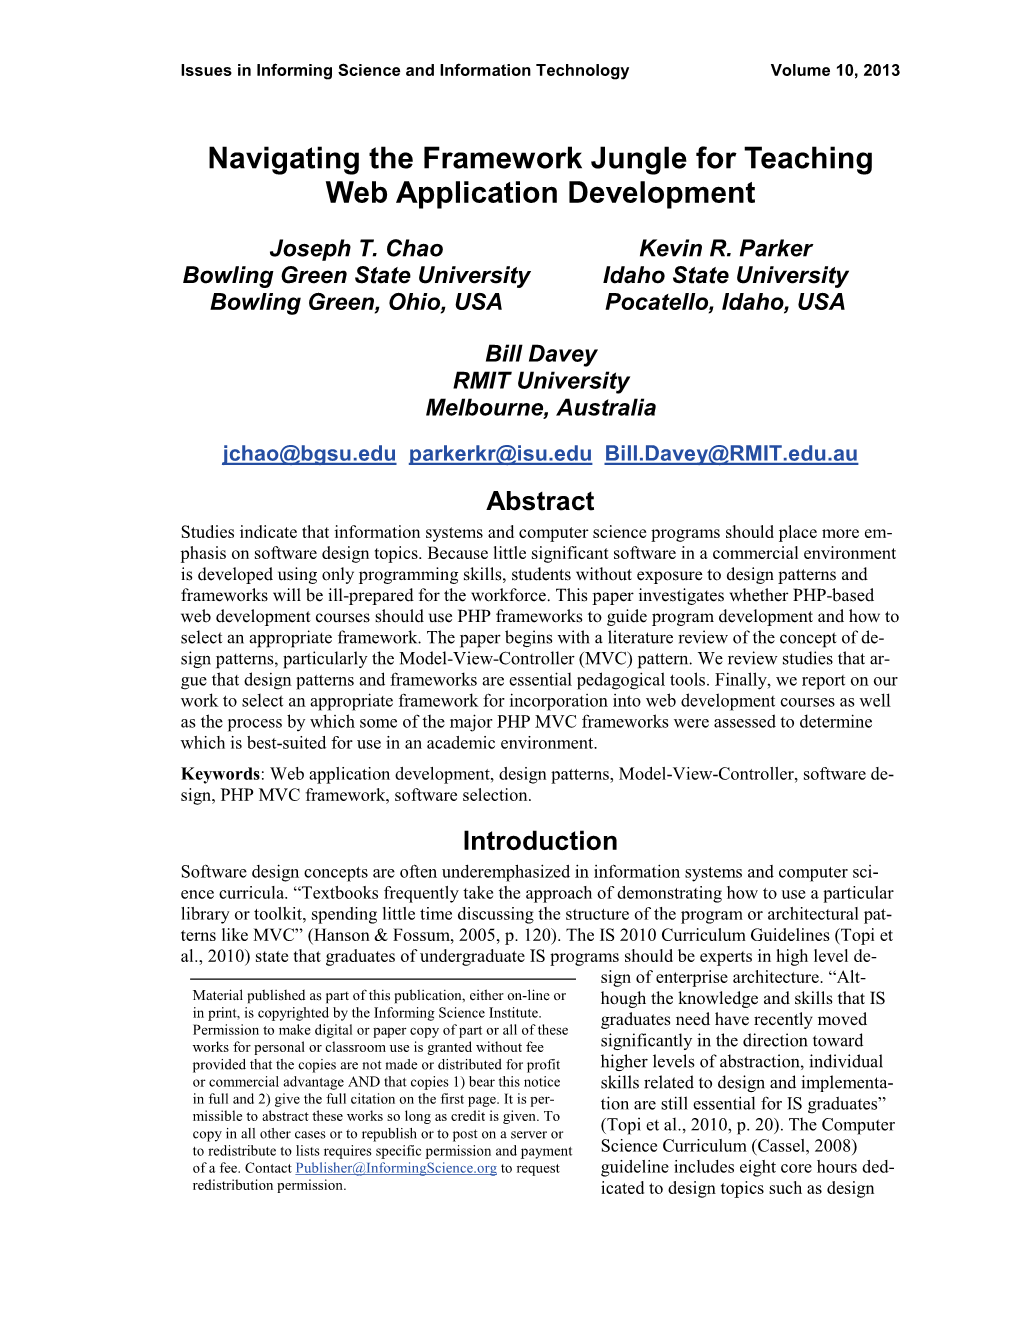 Navigating the Framework Jungle for Teaching Web Application Development